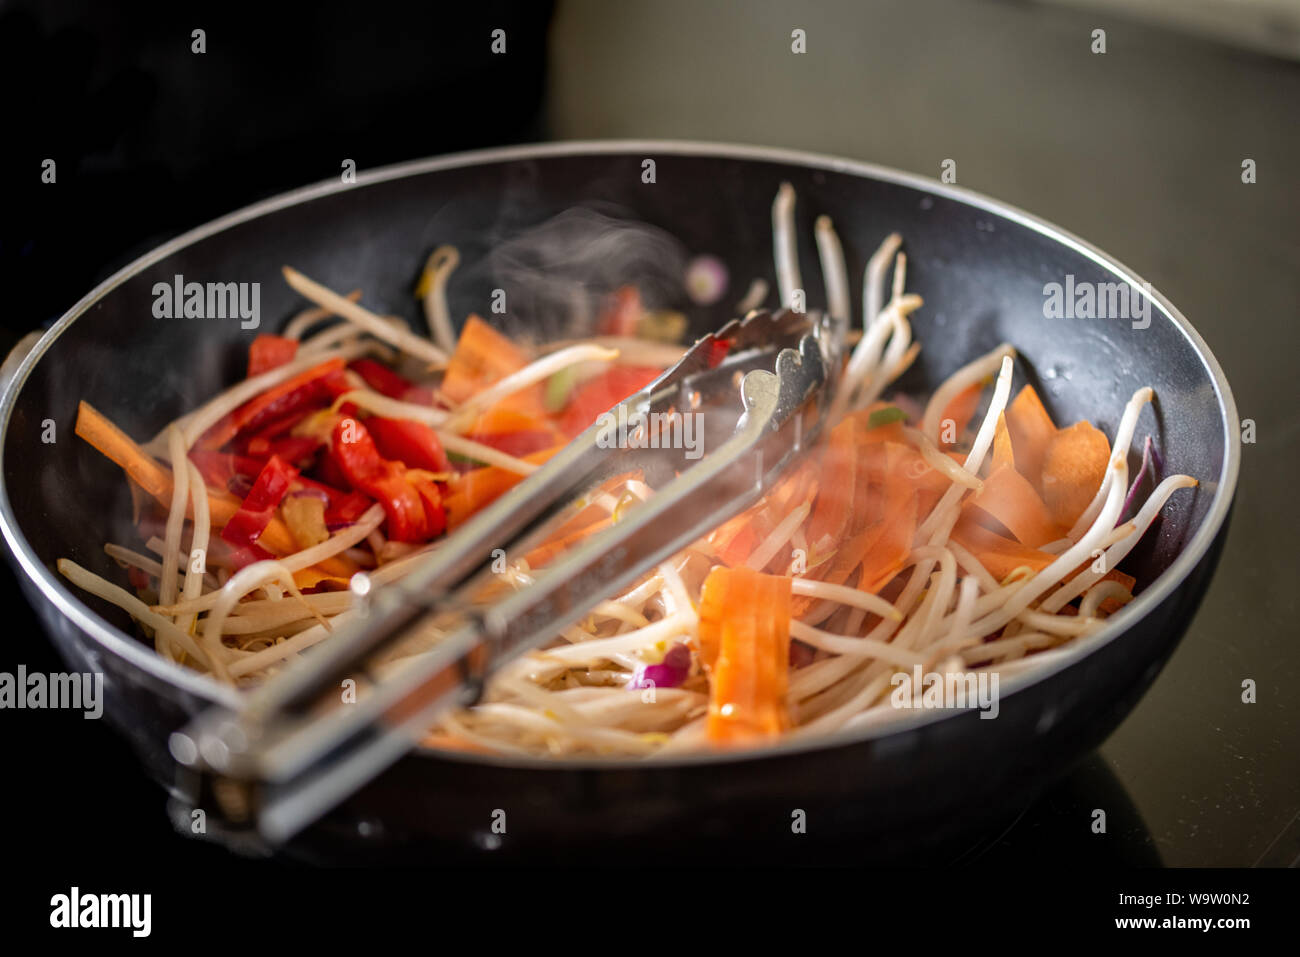 Preparing a stir fry. Stock Photo